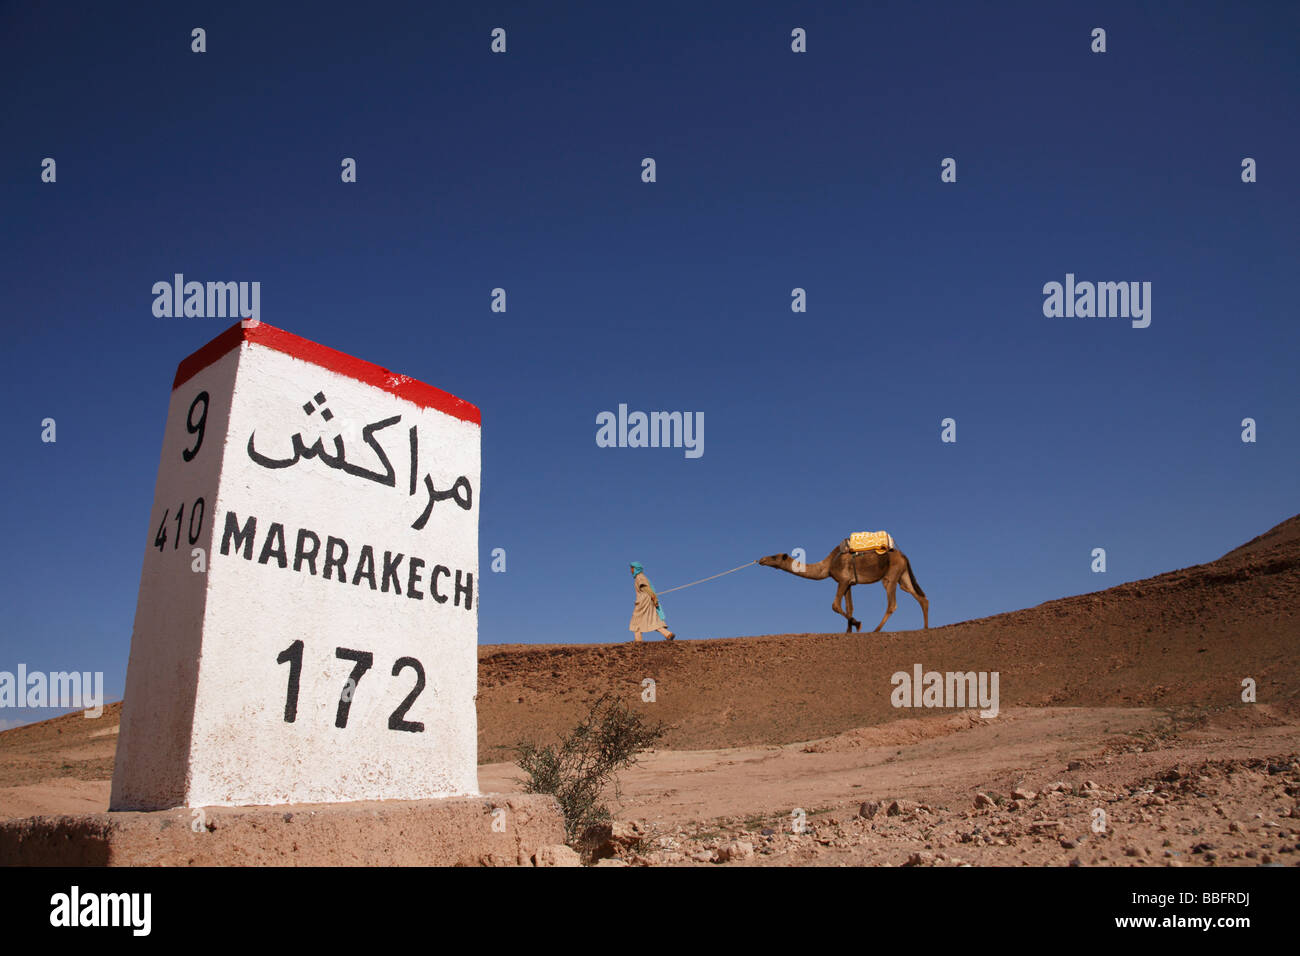 Africa, North Africa, Morocco, Atlas Region, Desert, Marrakech Road Sign, 172 km, Composite Image Stock Photo